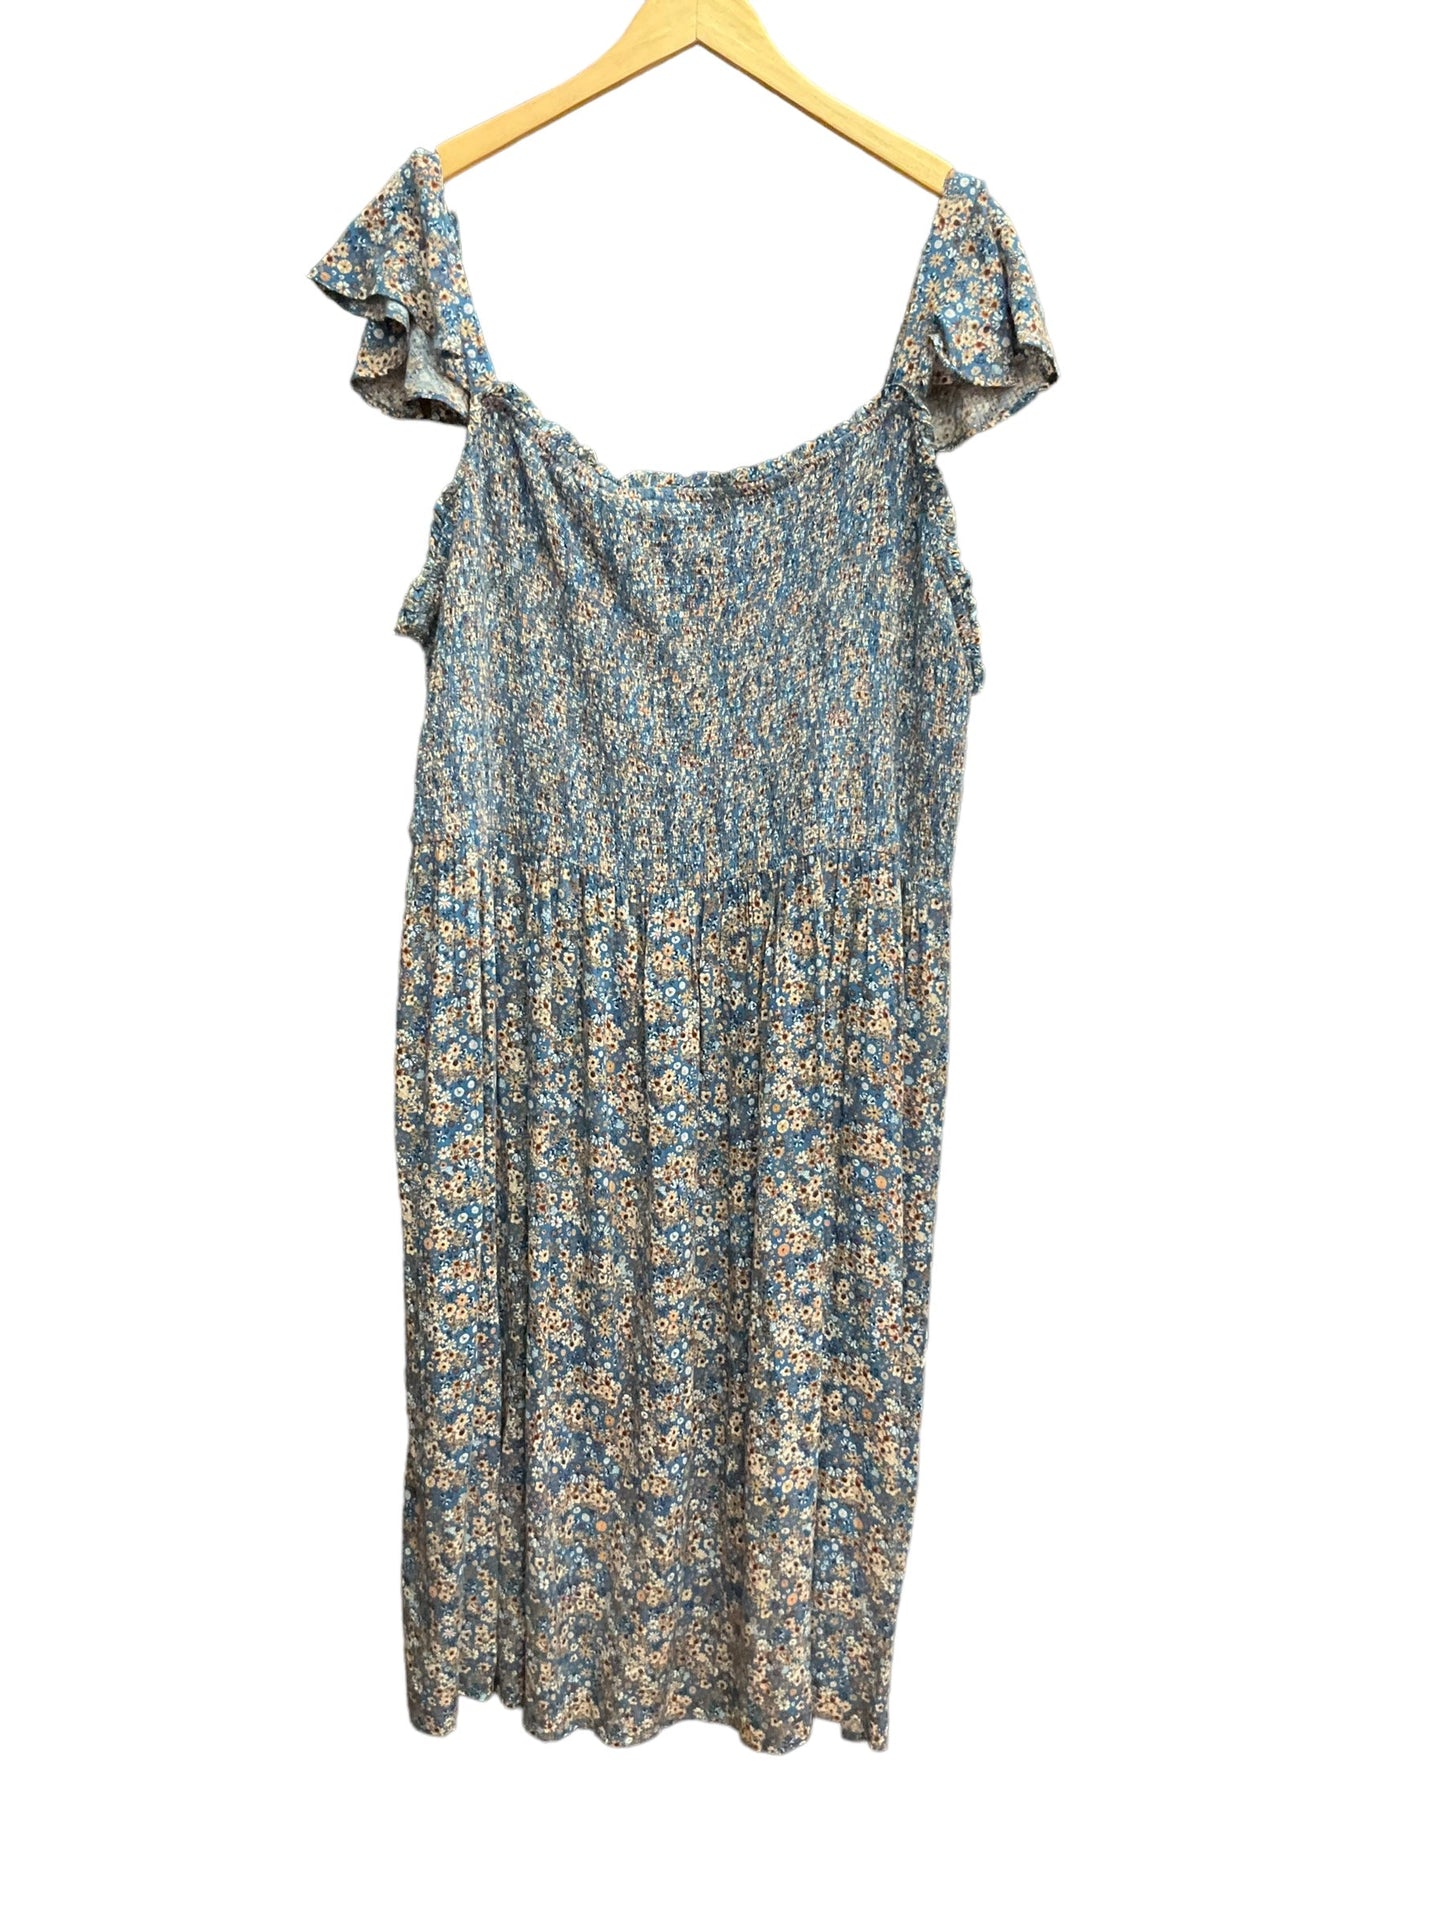 Floral Print Dress Casual Midi Sonoma, Size 4x